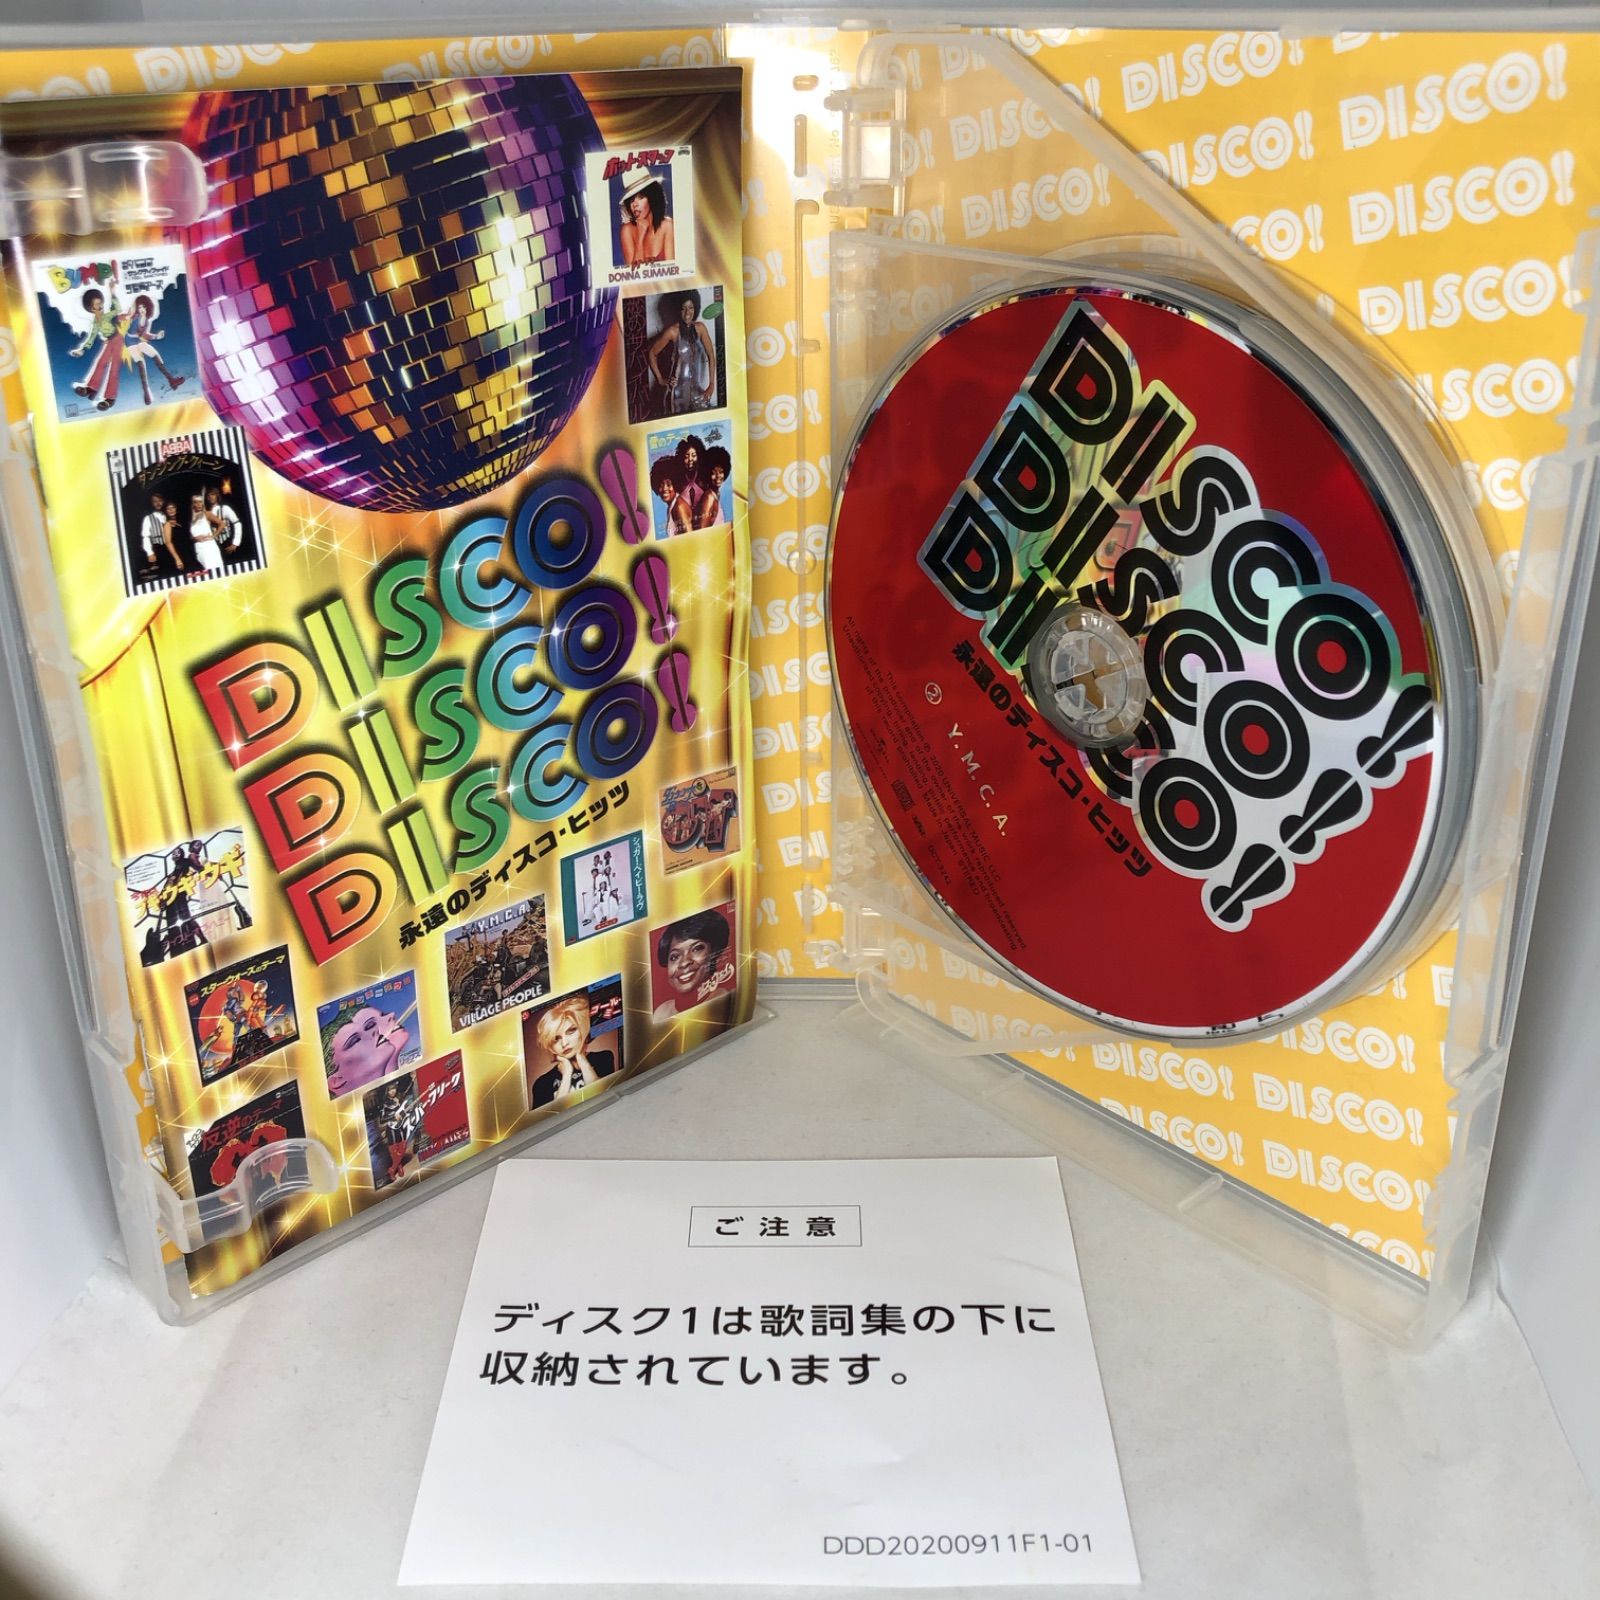 DISCO!DISCO!DISCO!～永遠のディスコ・ヒッツ - CD